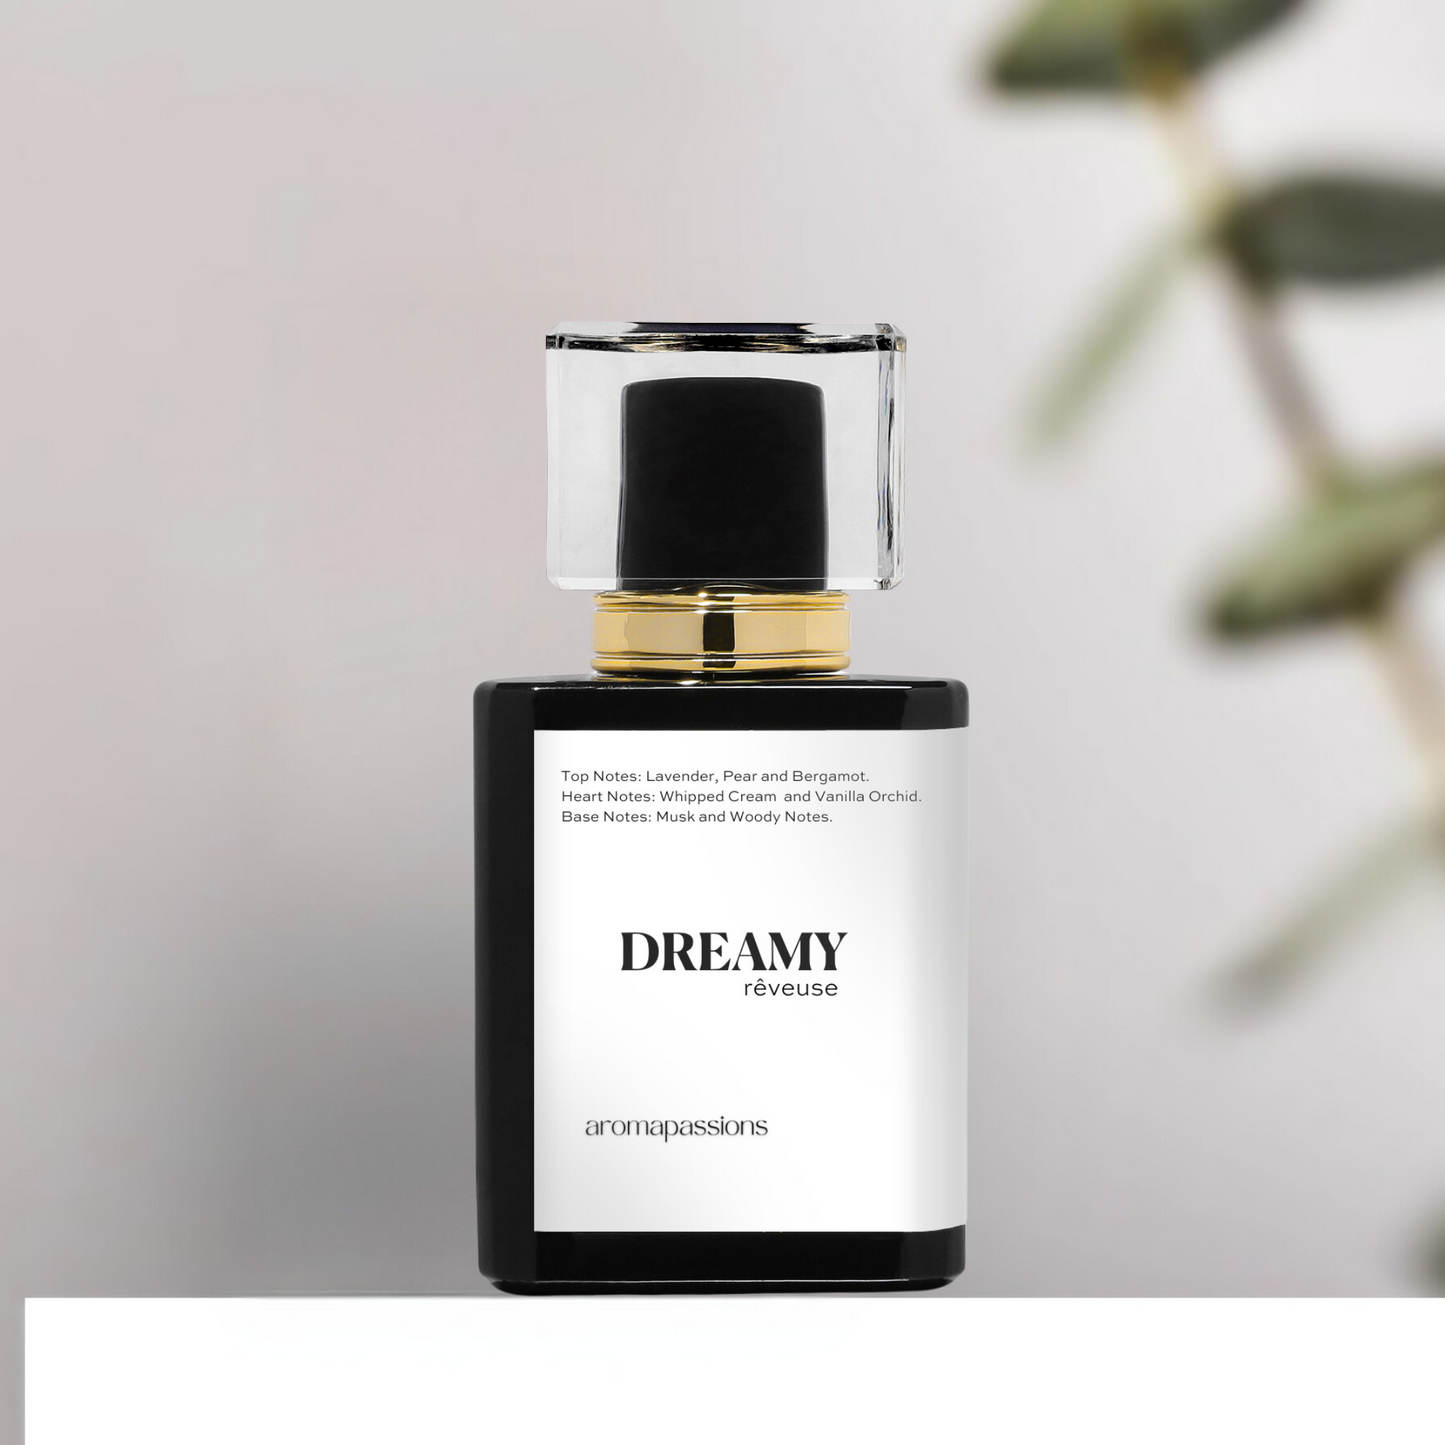 DREAMY | Inspired by ARIANA GRANDE CLOUD | Cloud Dupe Pheromone Perfume